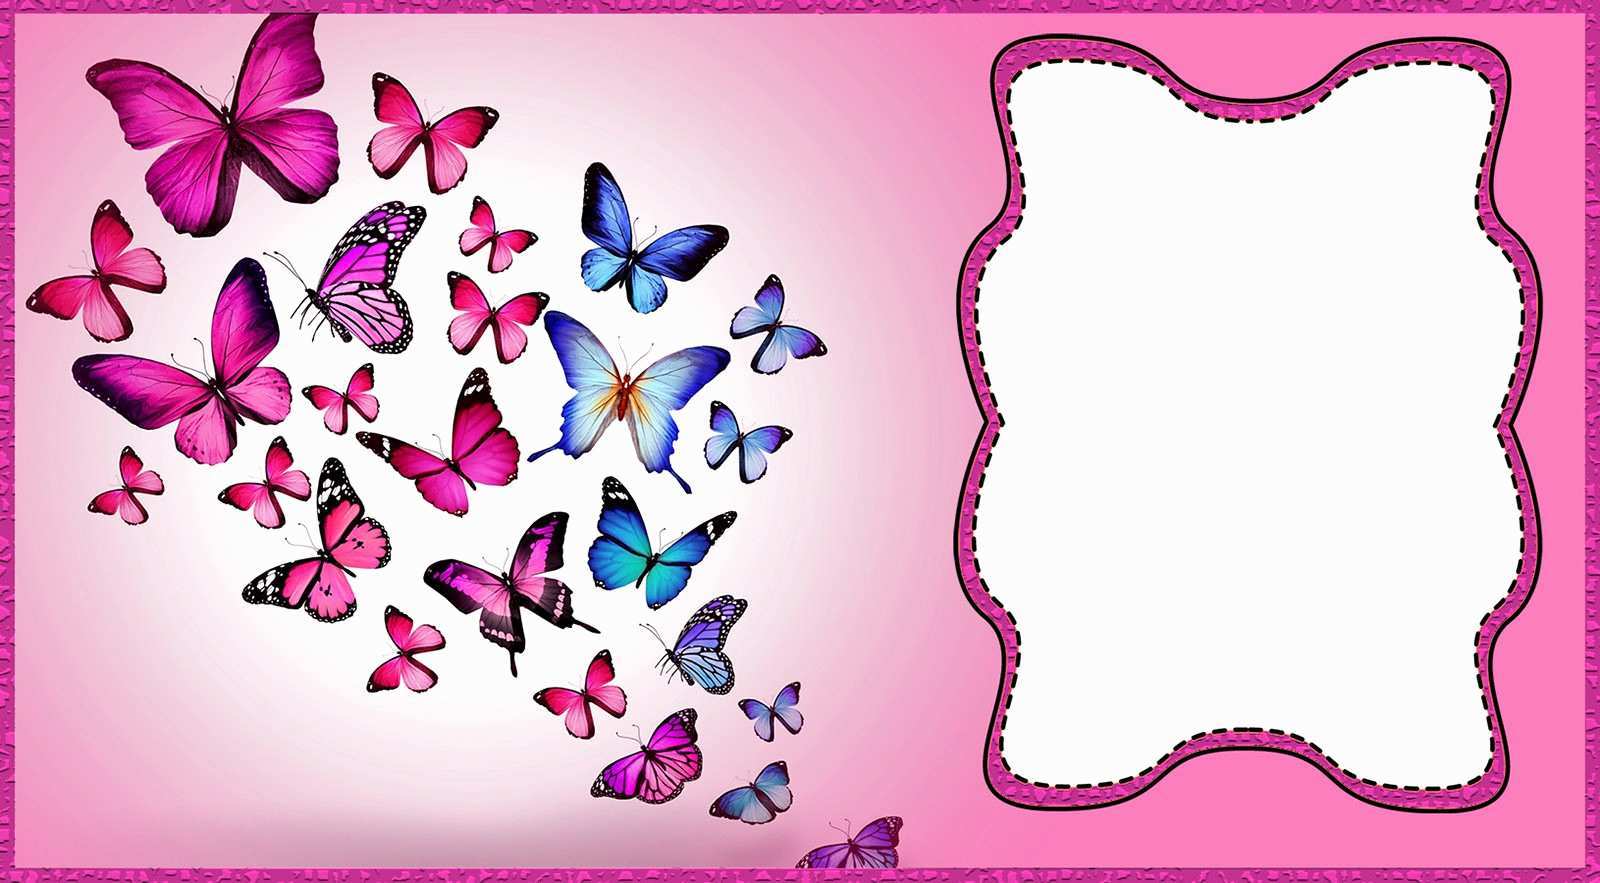 51 Create Birthday Invitation Template Butterfly Party in Photoshop with Birthday Invitation Template Butterfly Party